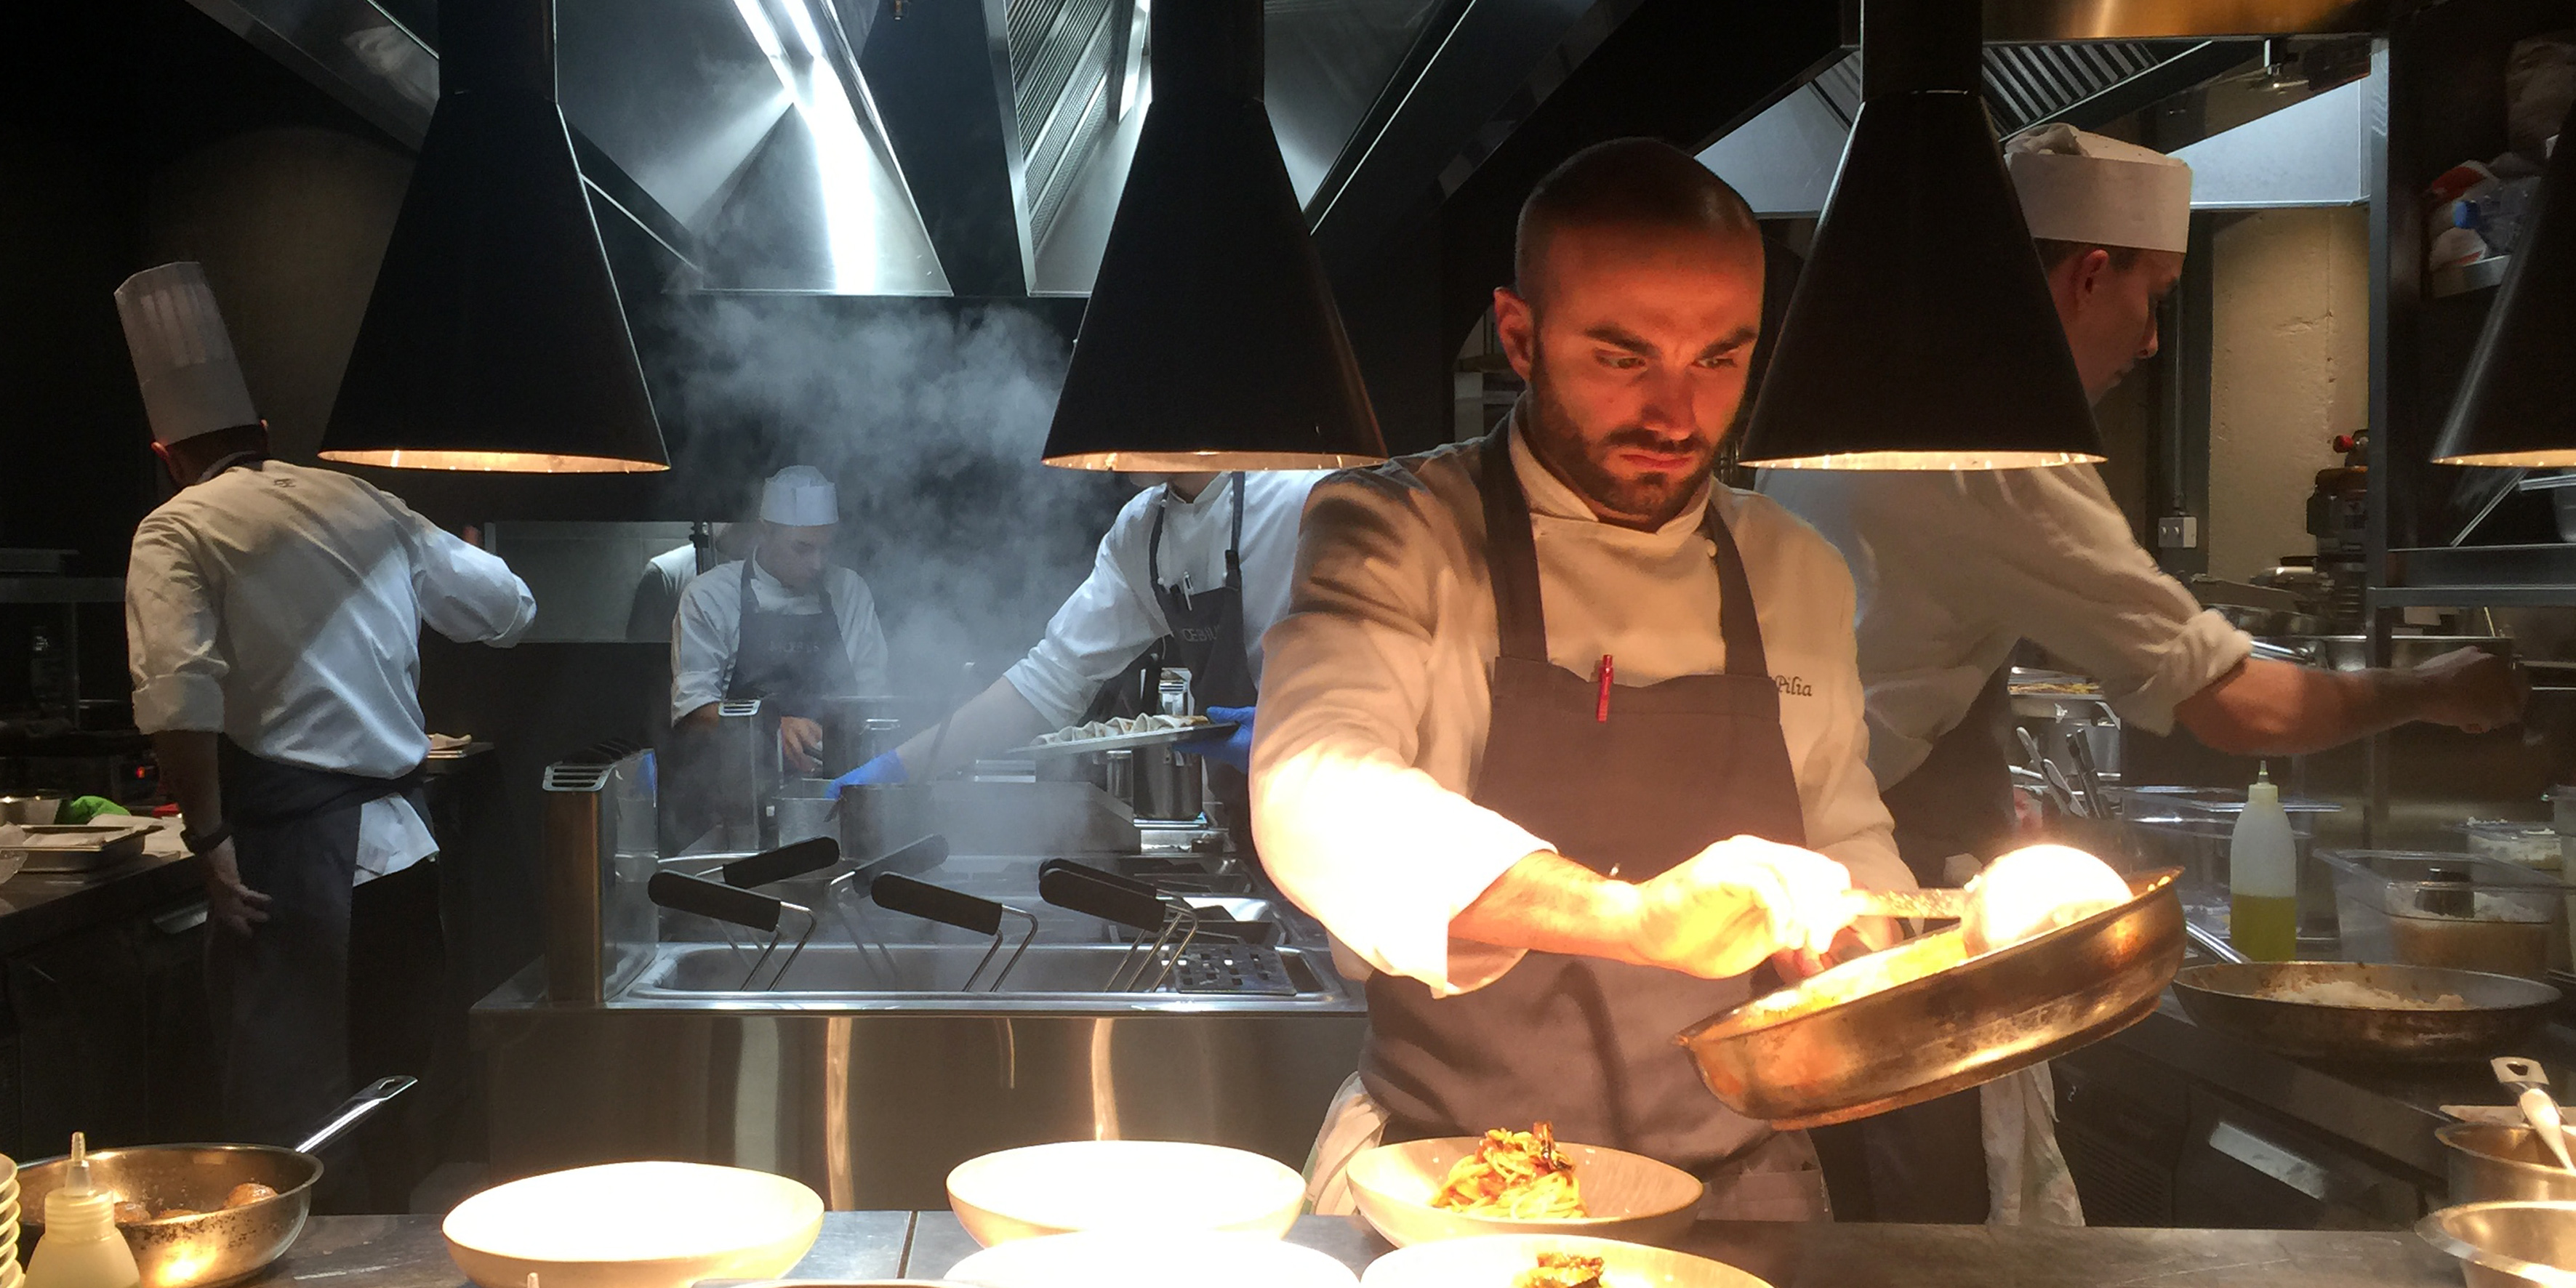 La brigata all'opera nella cucina sospesa-Concept Restaurant Moebius Milano